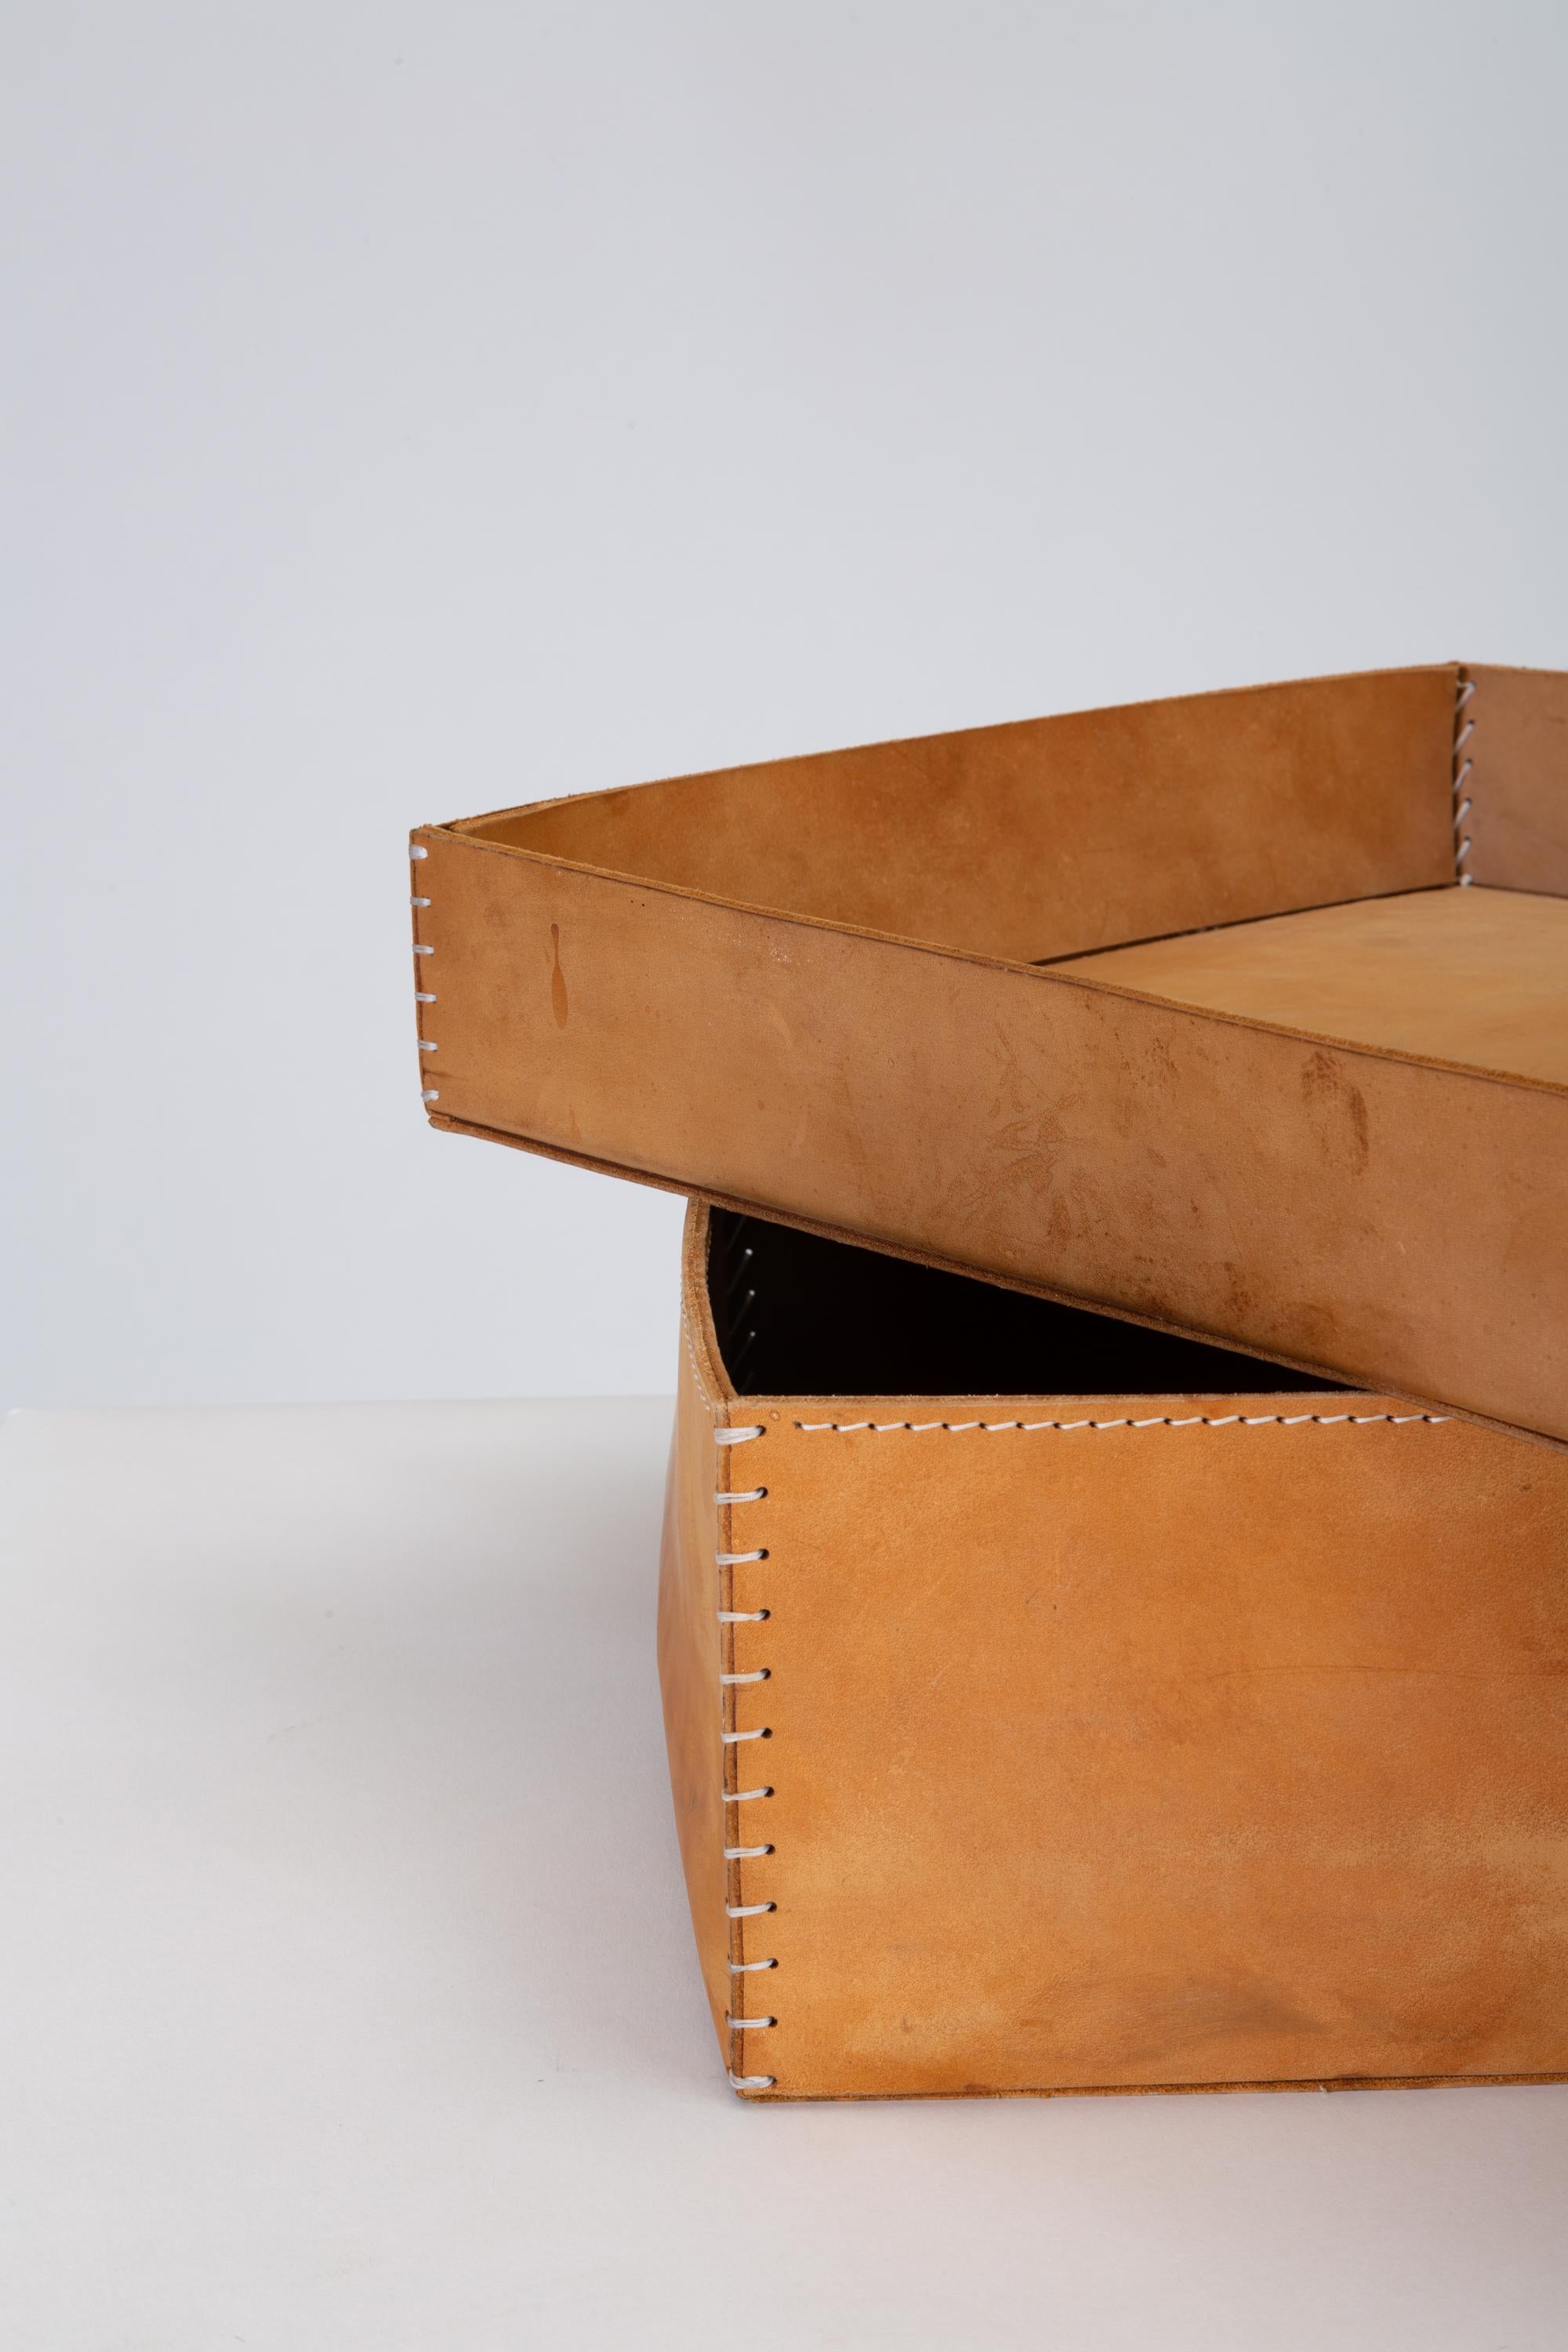 Large Leather Portfolio Box by Arte & Cuoio 2